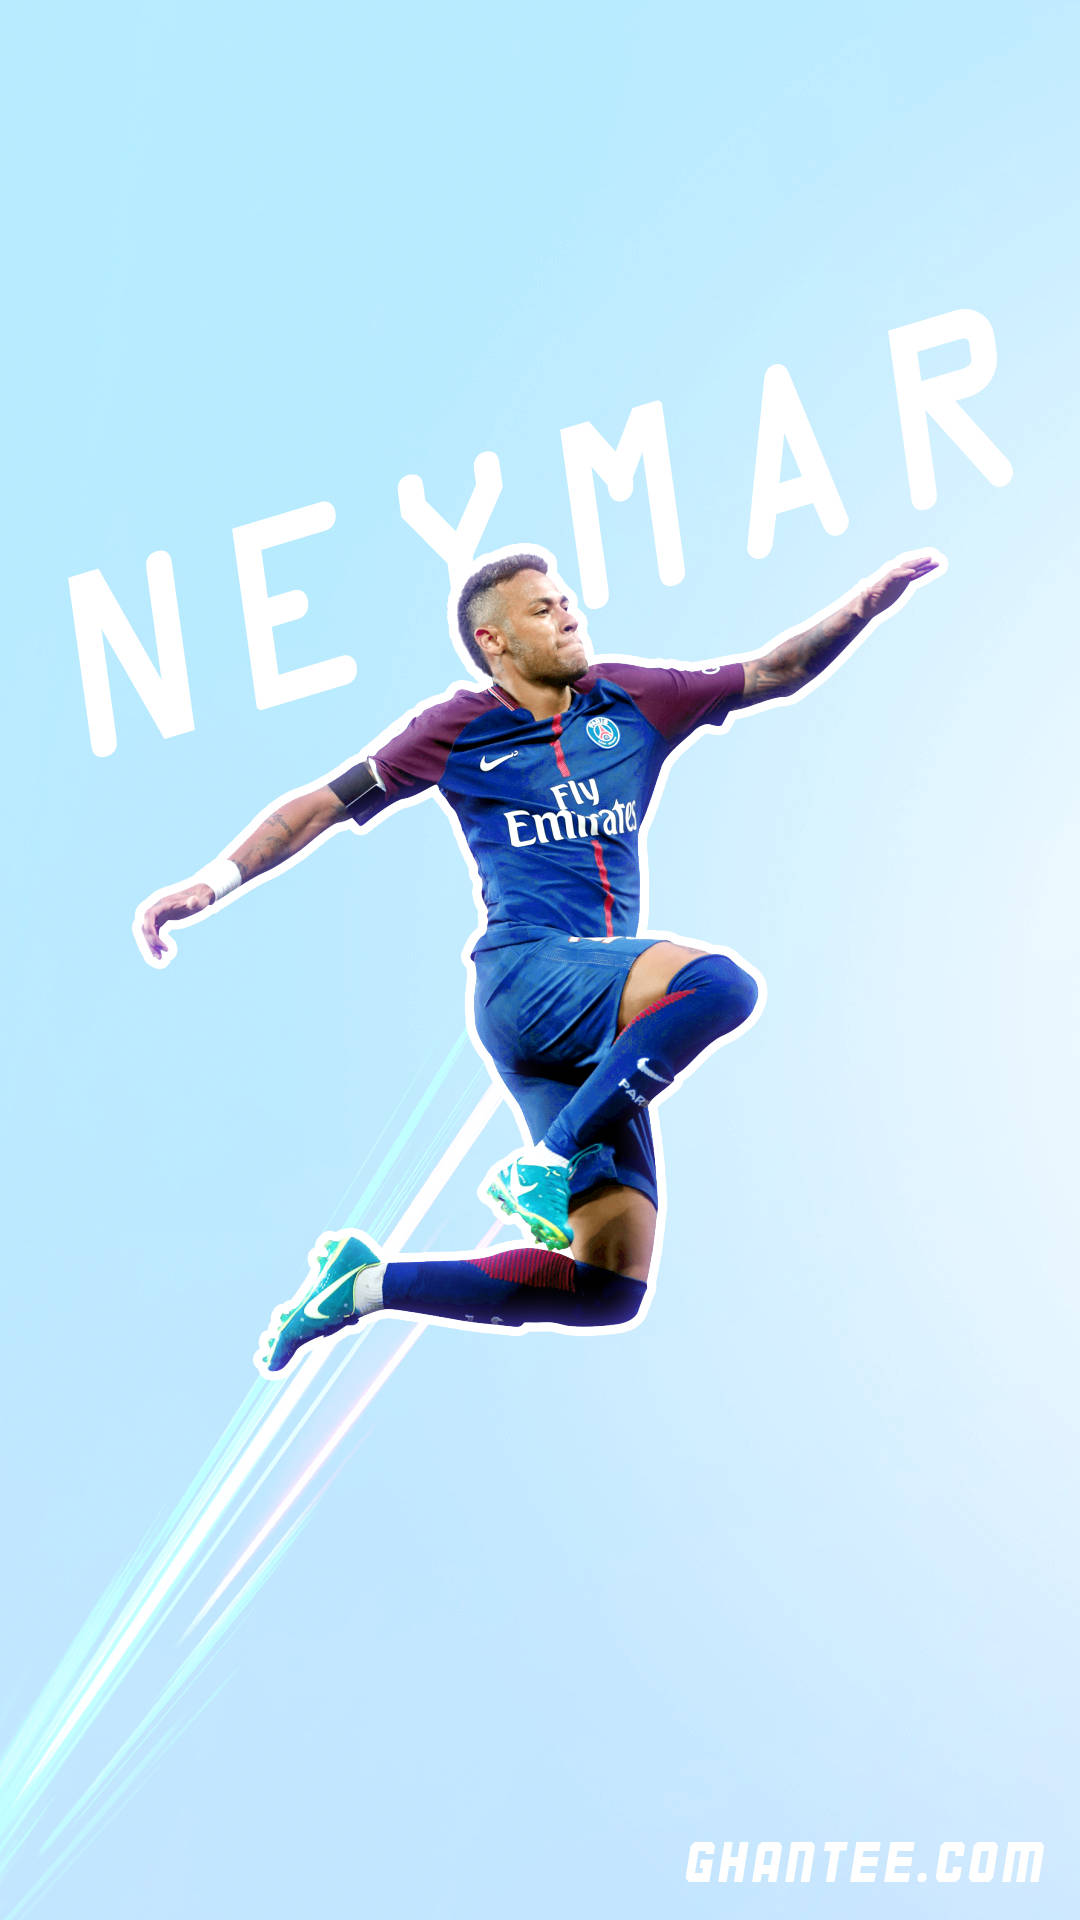 1080X1920 Neymar Wallpaper and Background